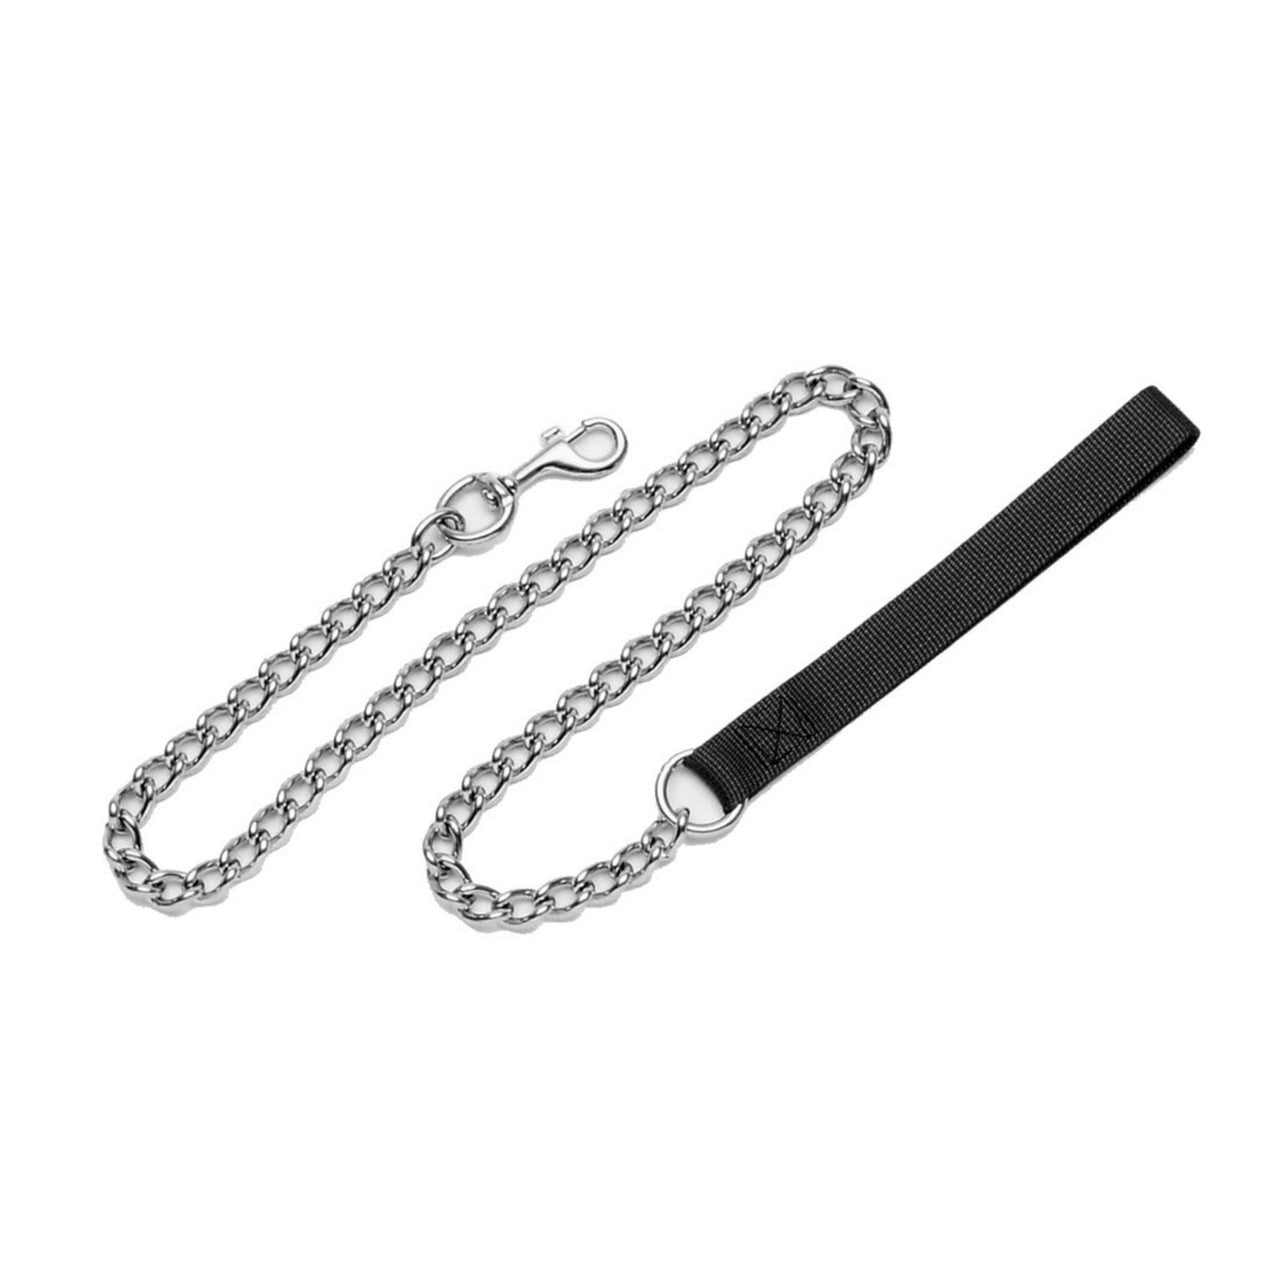 Titan Chain Dog Leash with Nylon Handle Black 4 mm x 4 ft